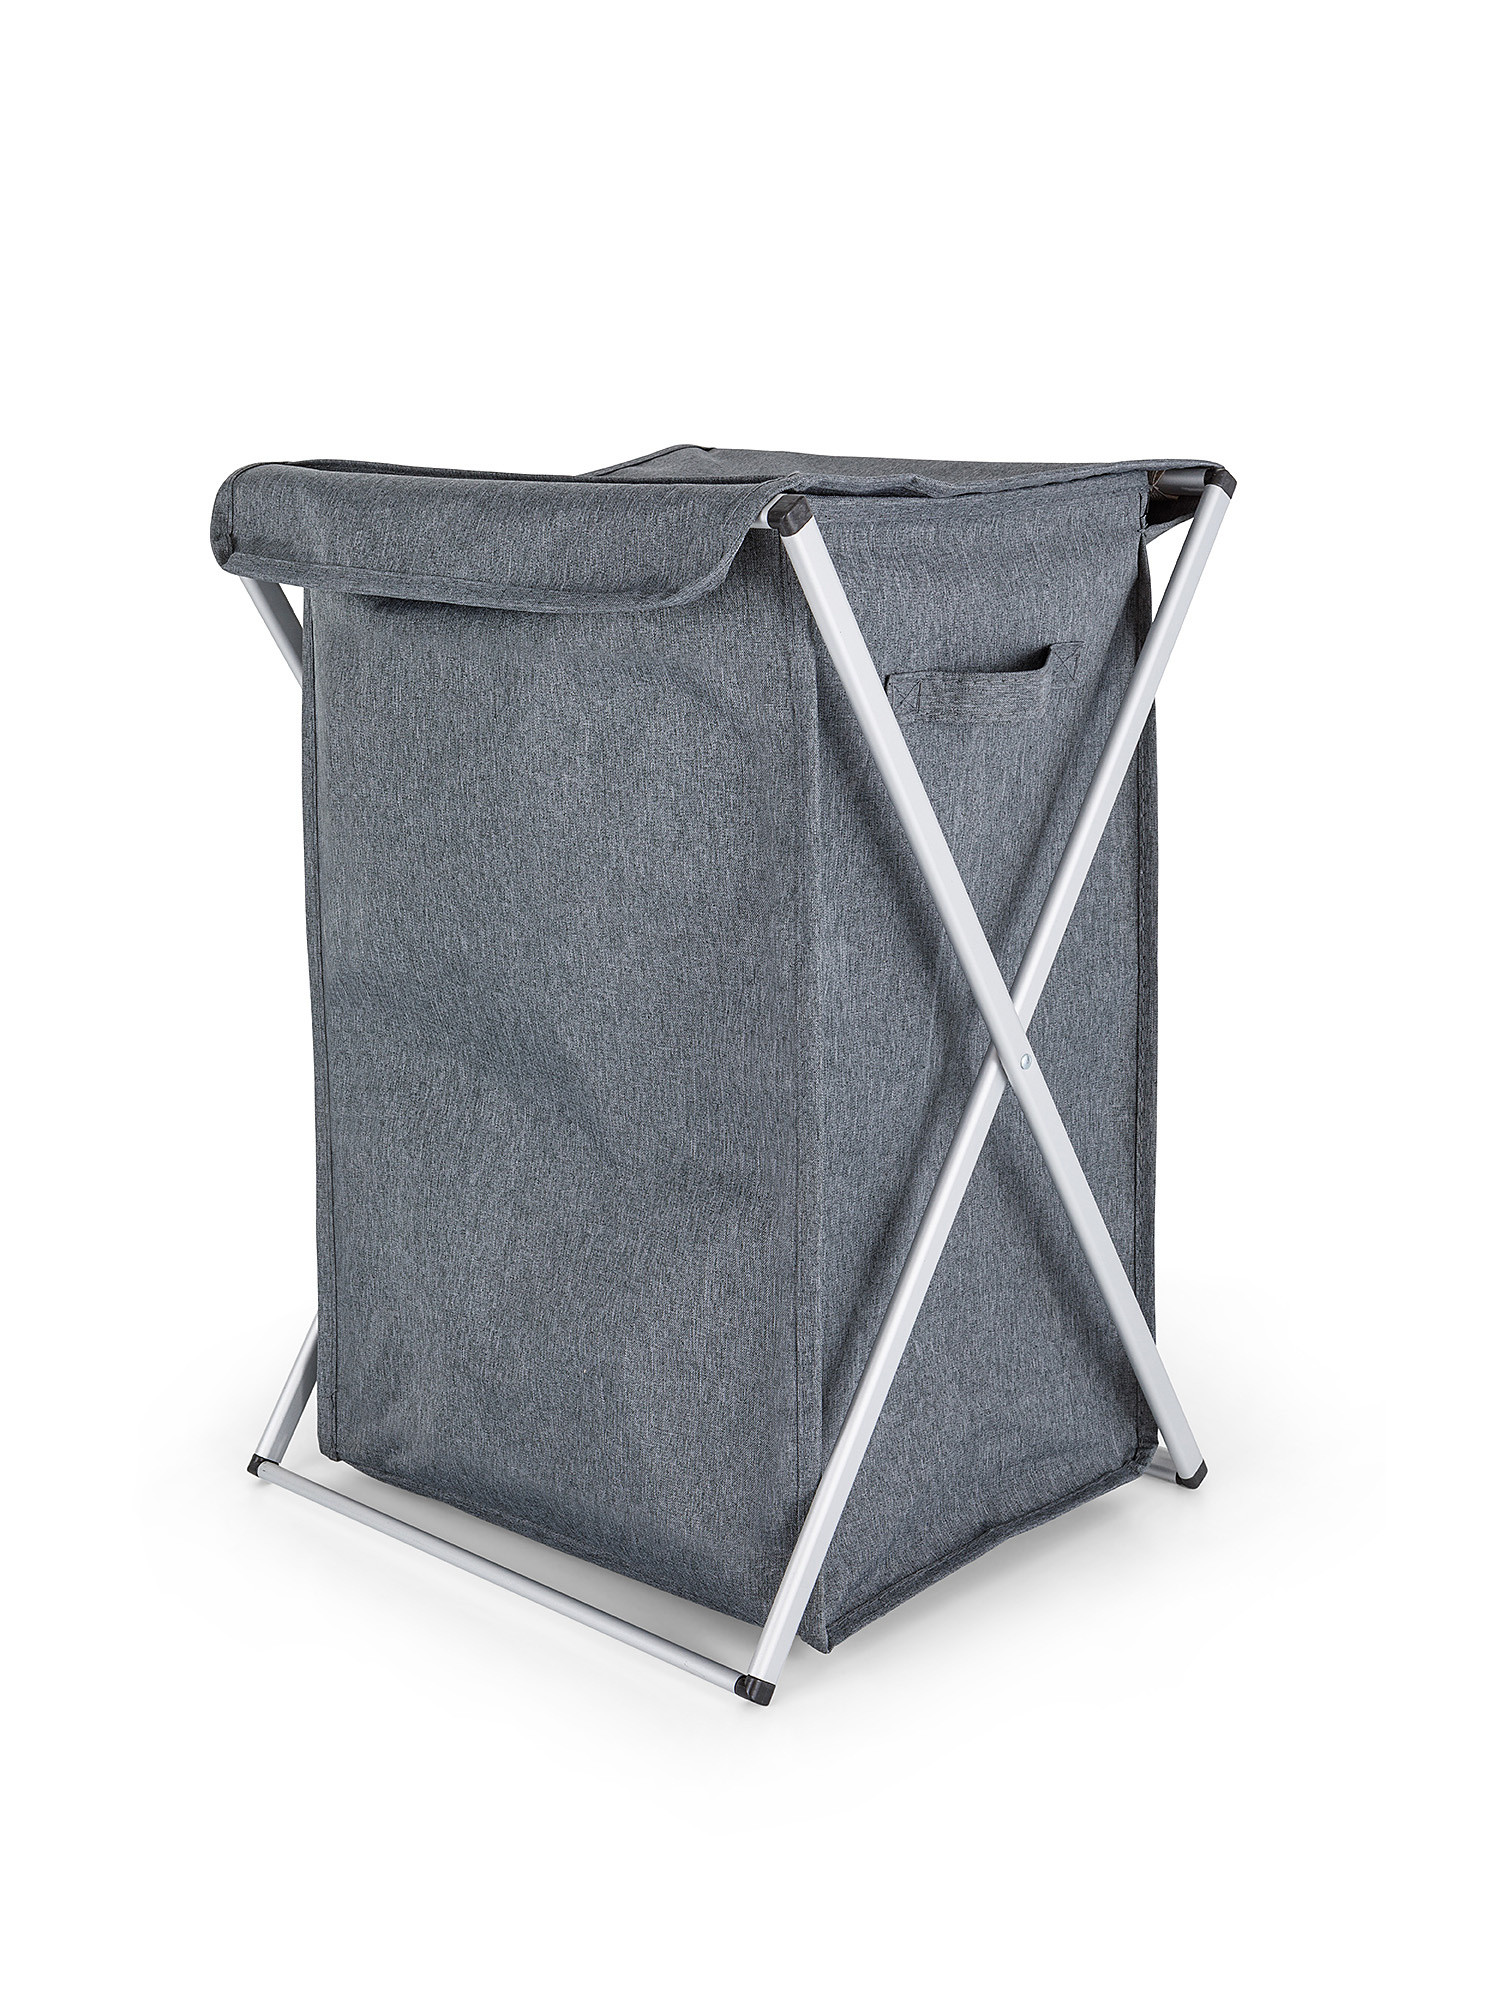 Collapsible laundry basket, Dark Grey, large image number 0